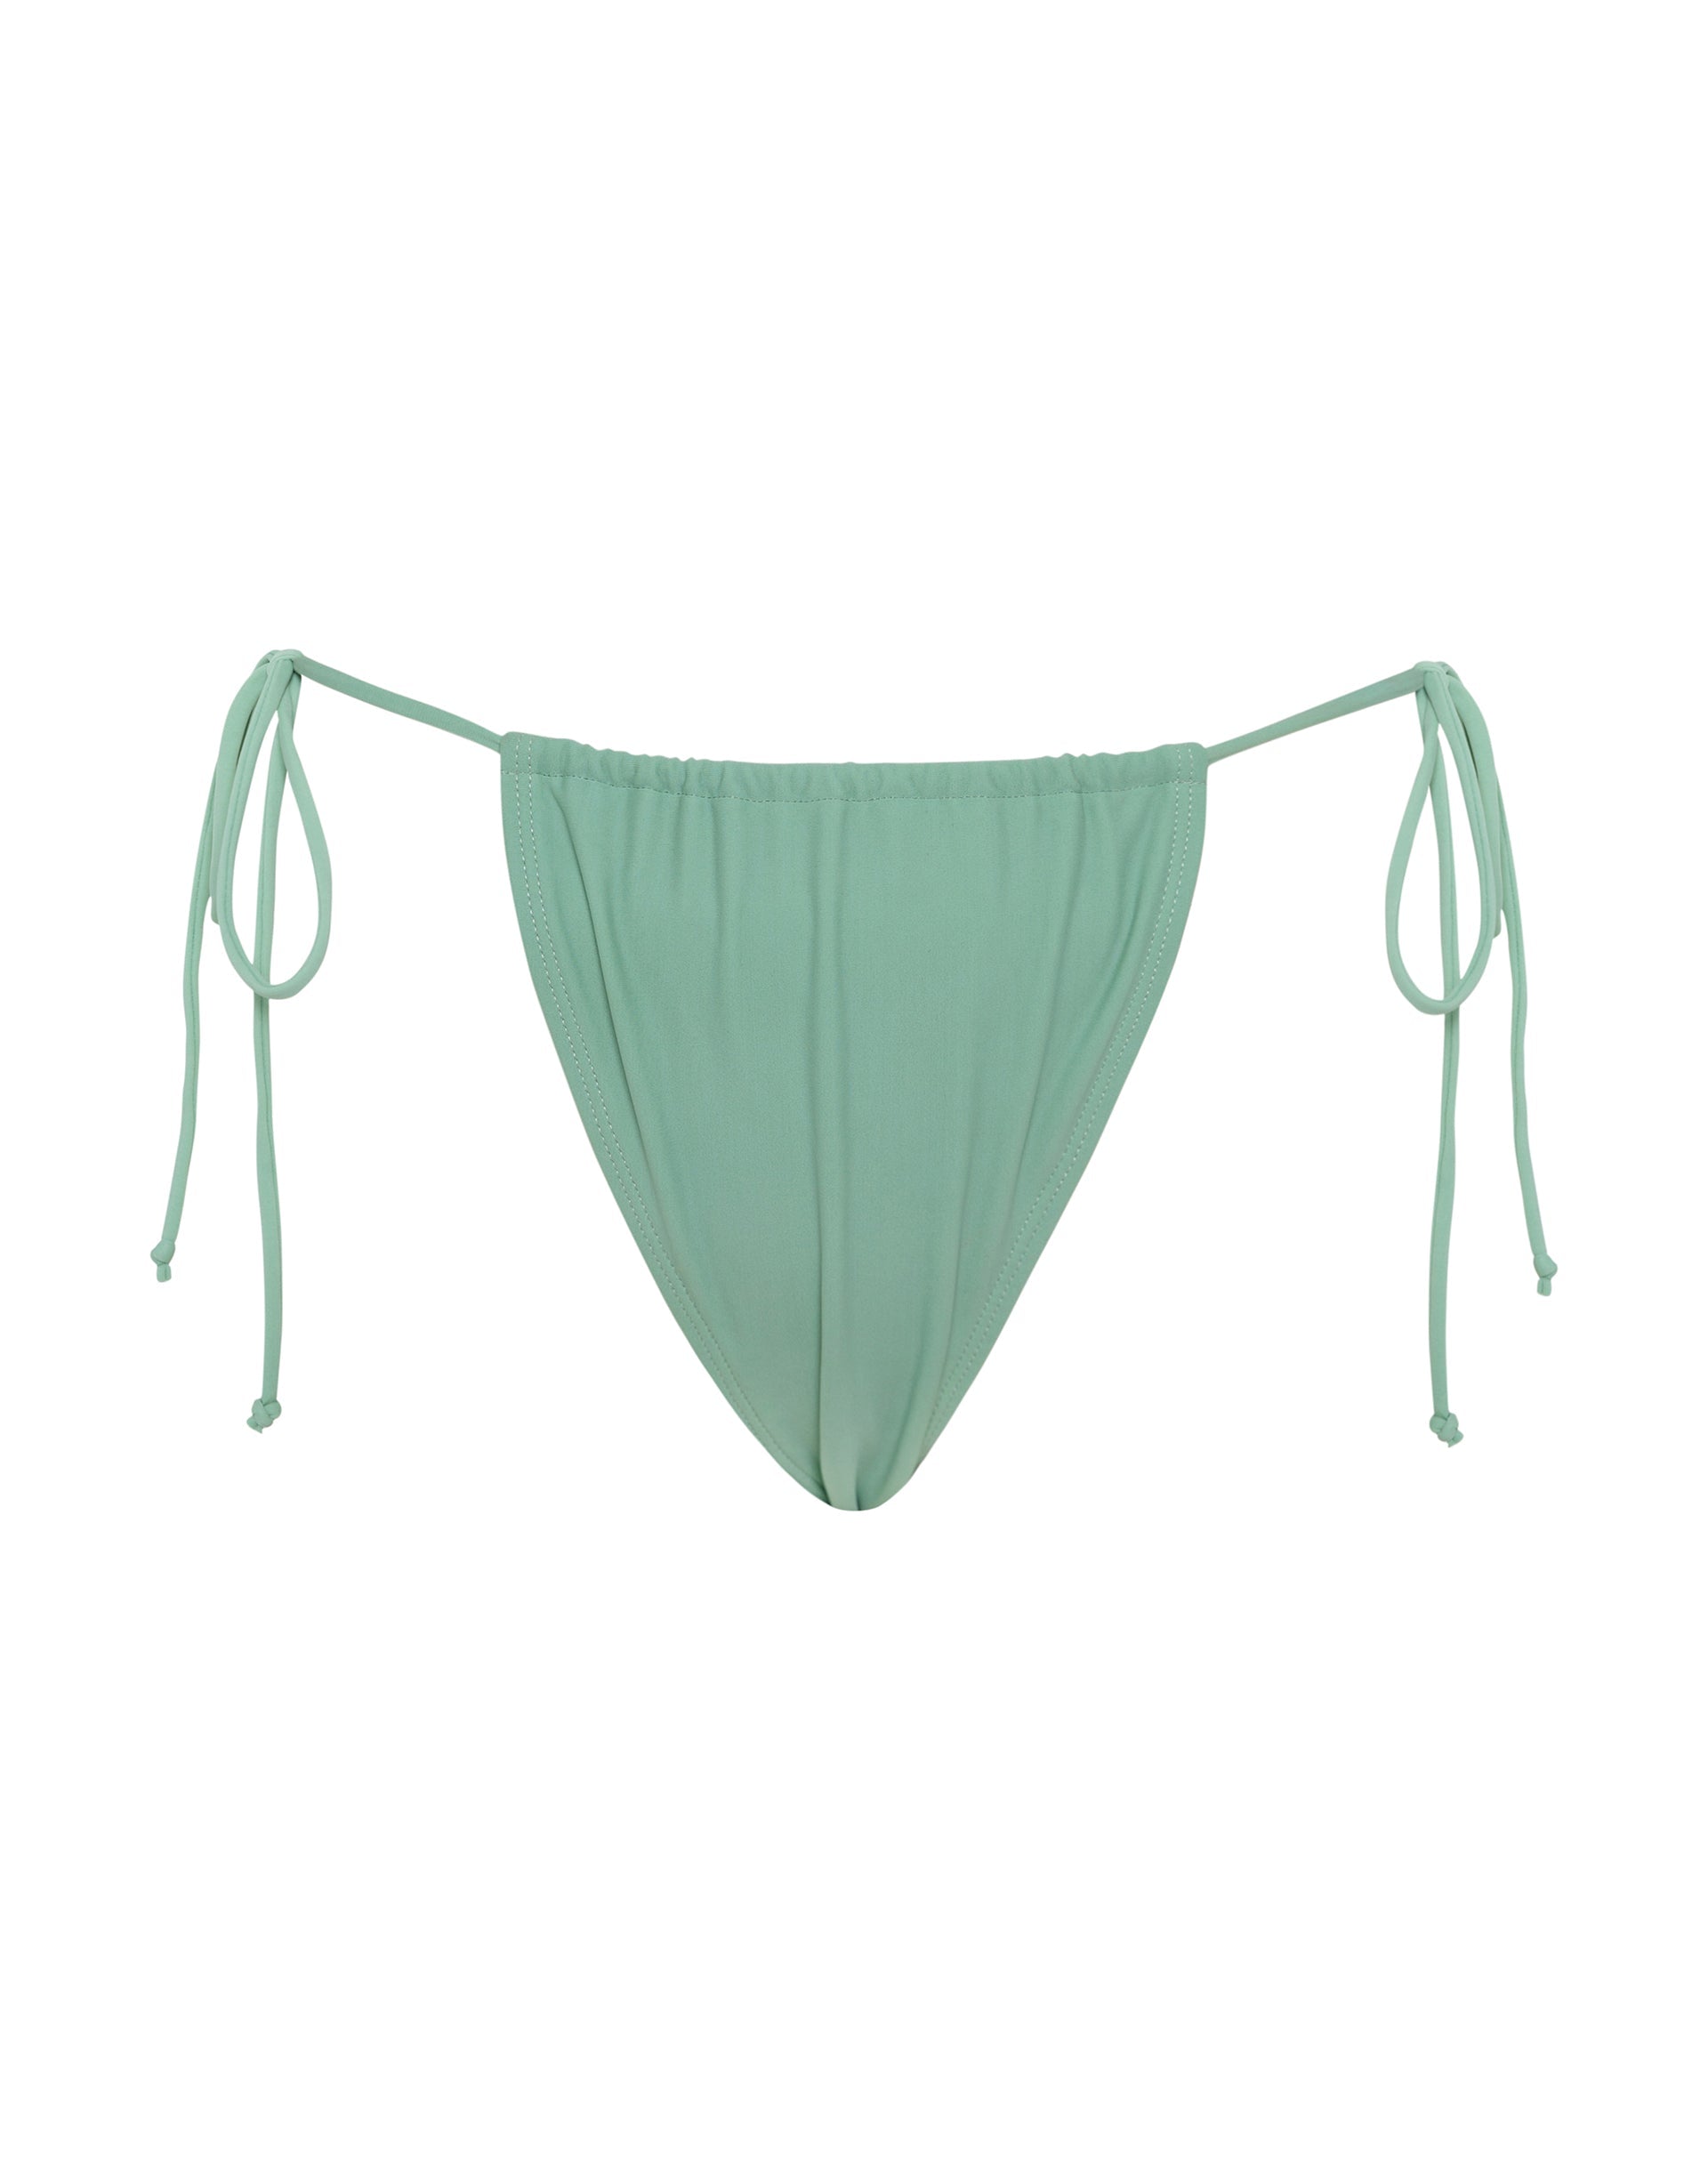 Imagen de la braguita de bikini Leyna, verde liquen